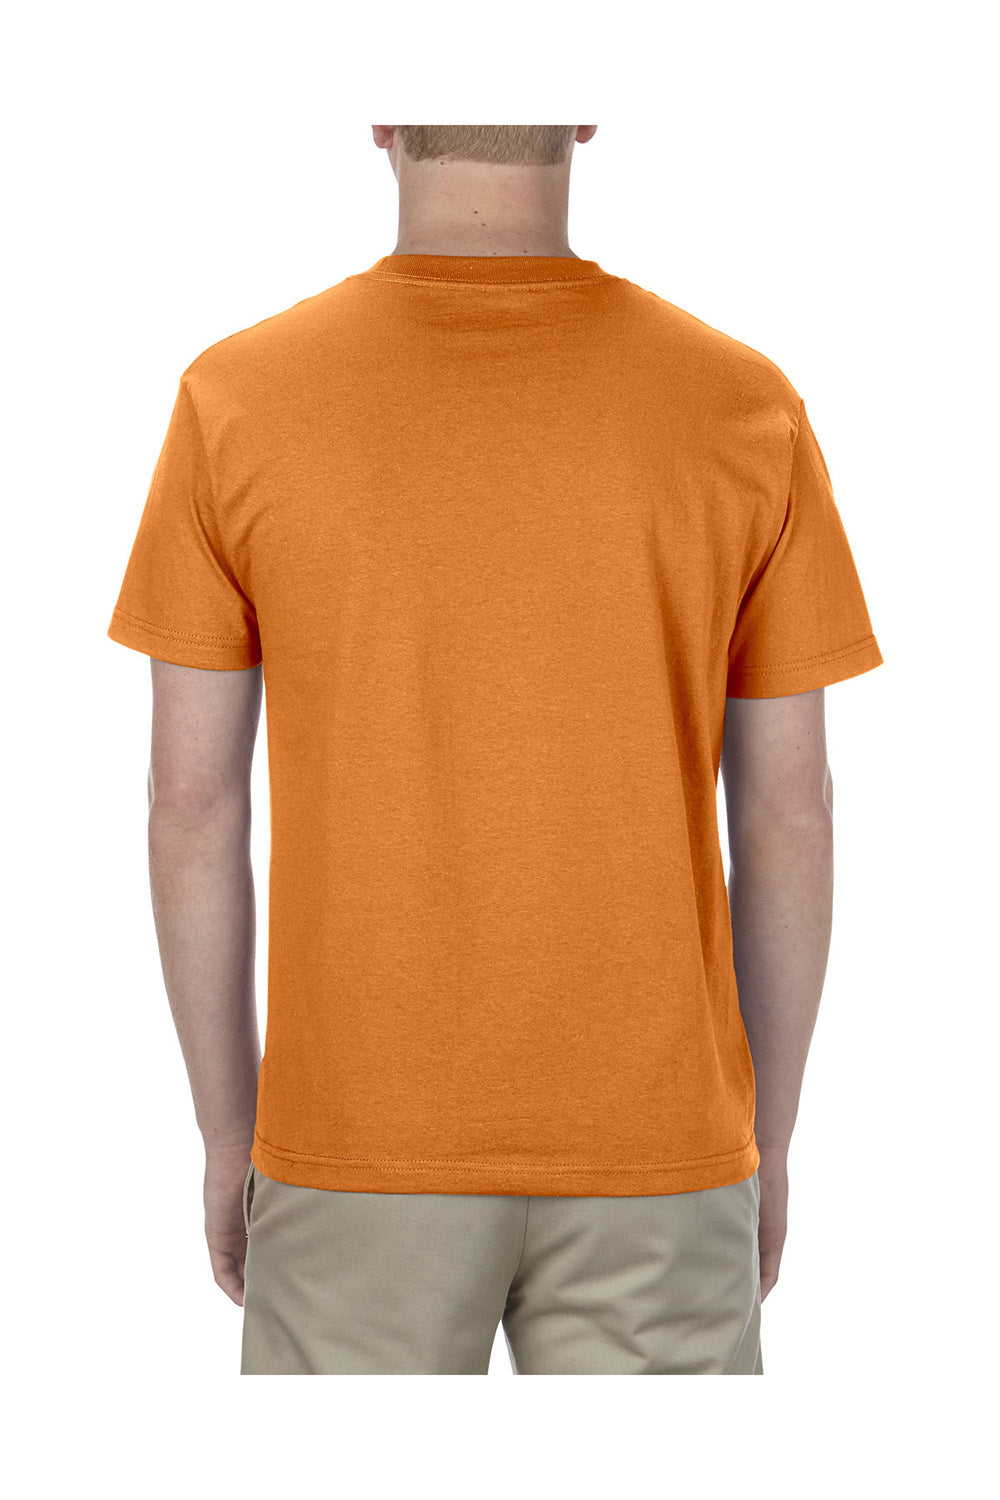 American Apparel 1301/AL1301 Mens Short Sleeve Crewneck T-Shirt Orange Model Back